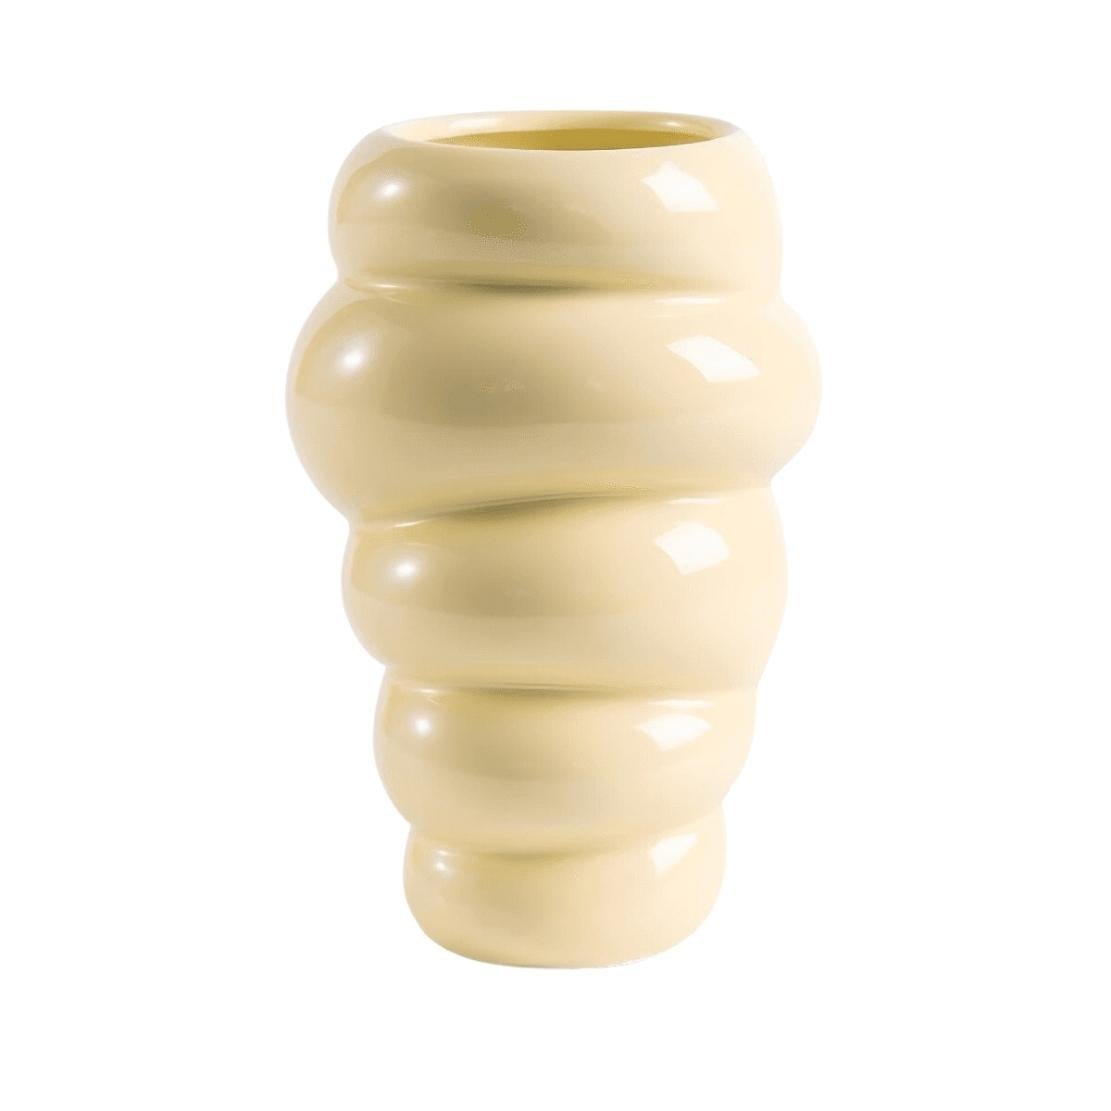 Tall, yellow ceramic honeycomb vase